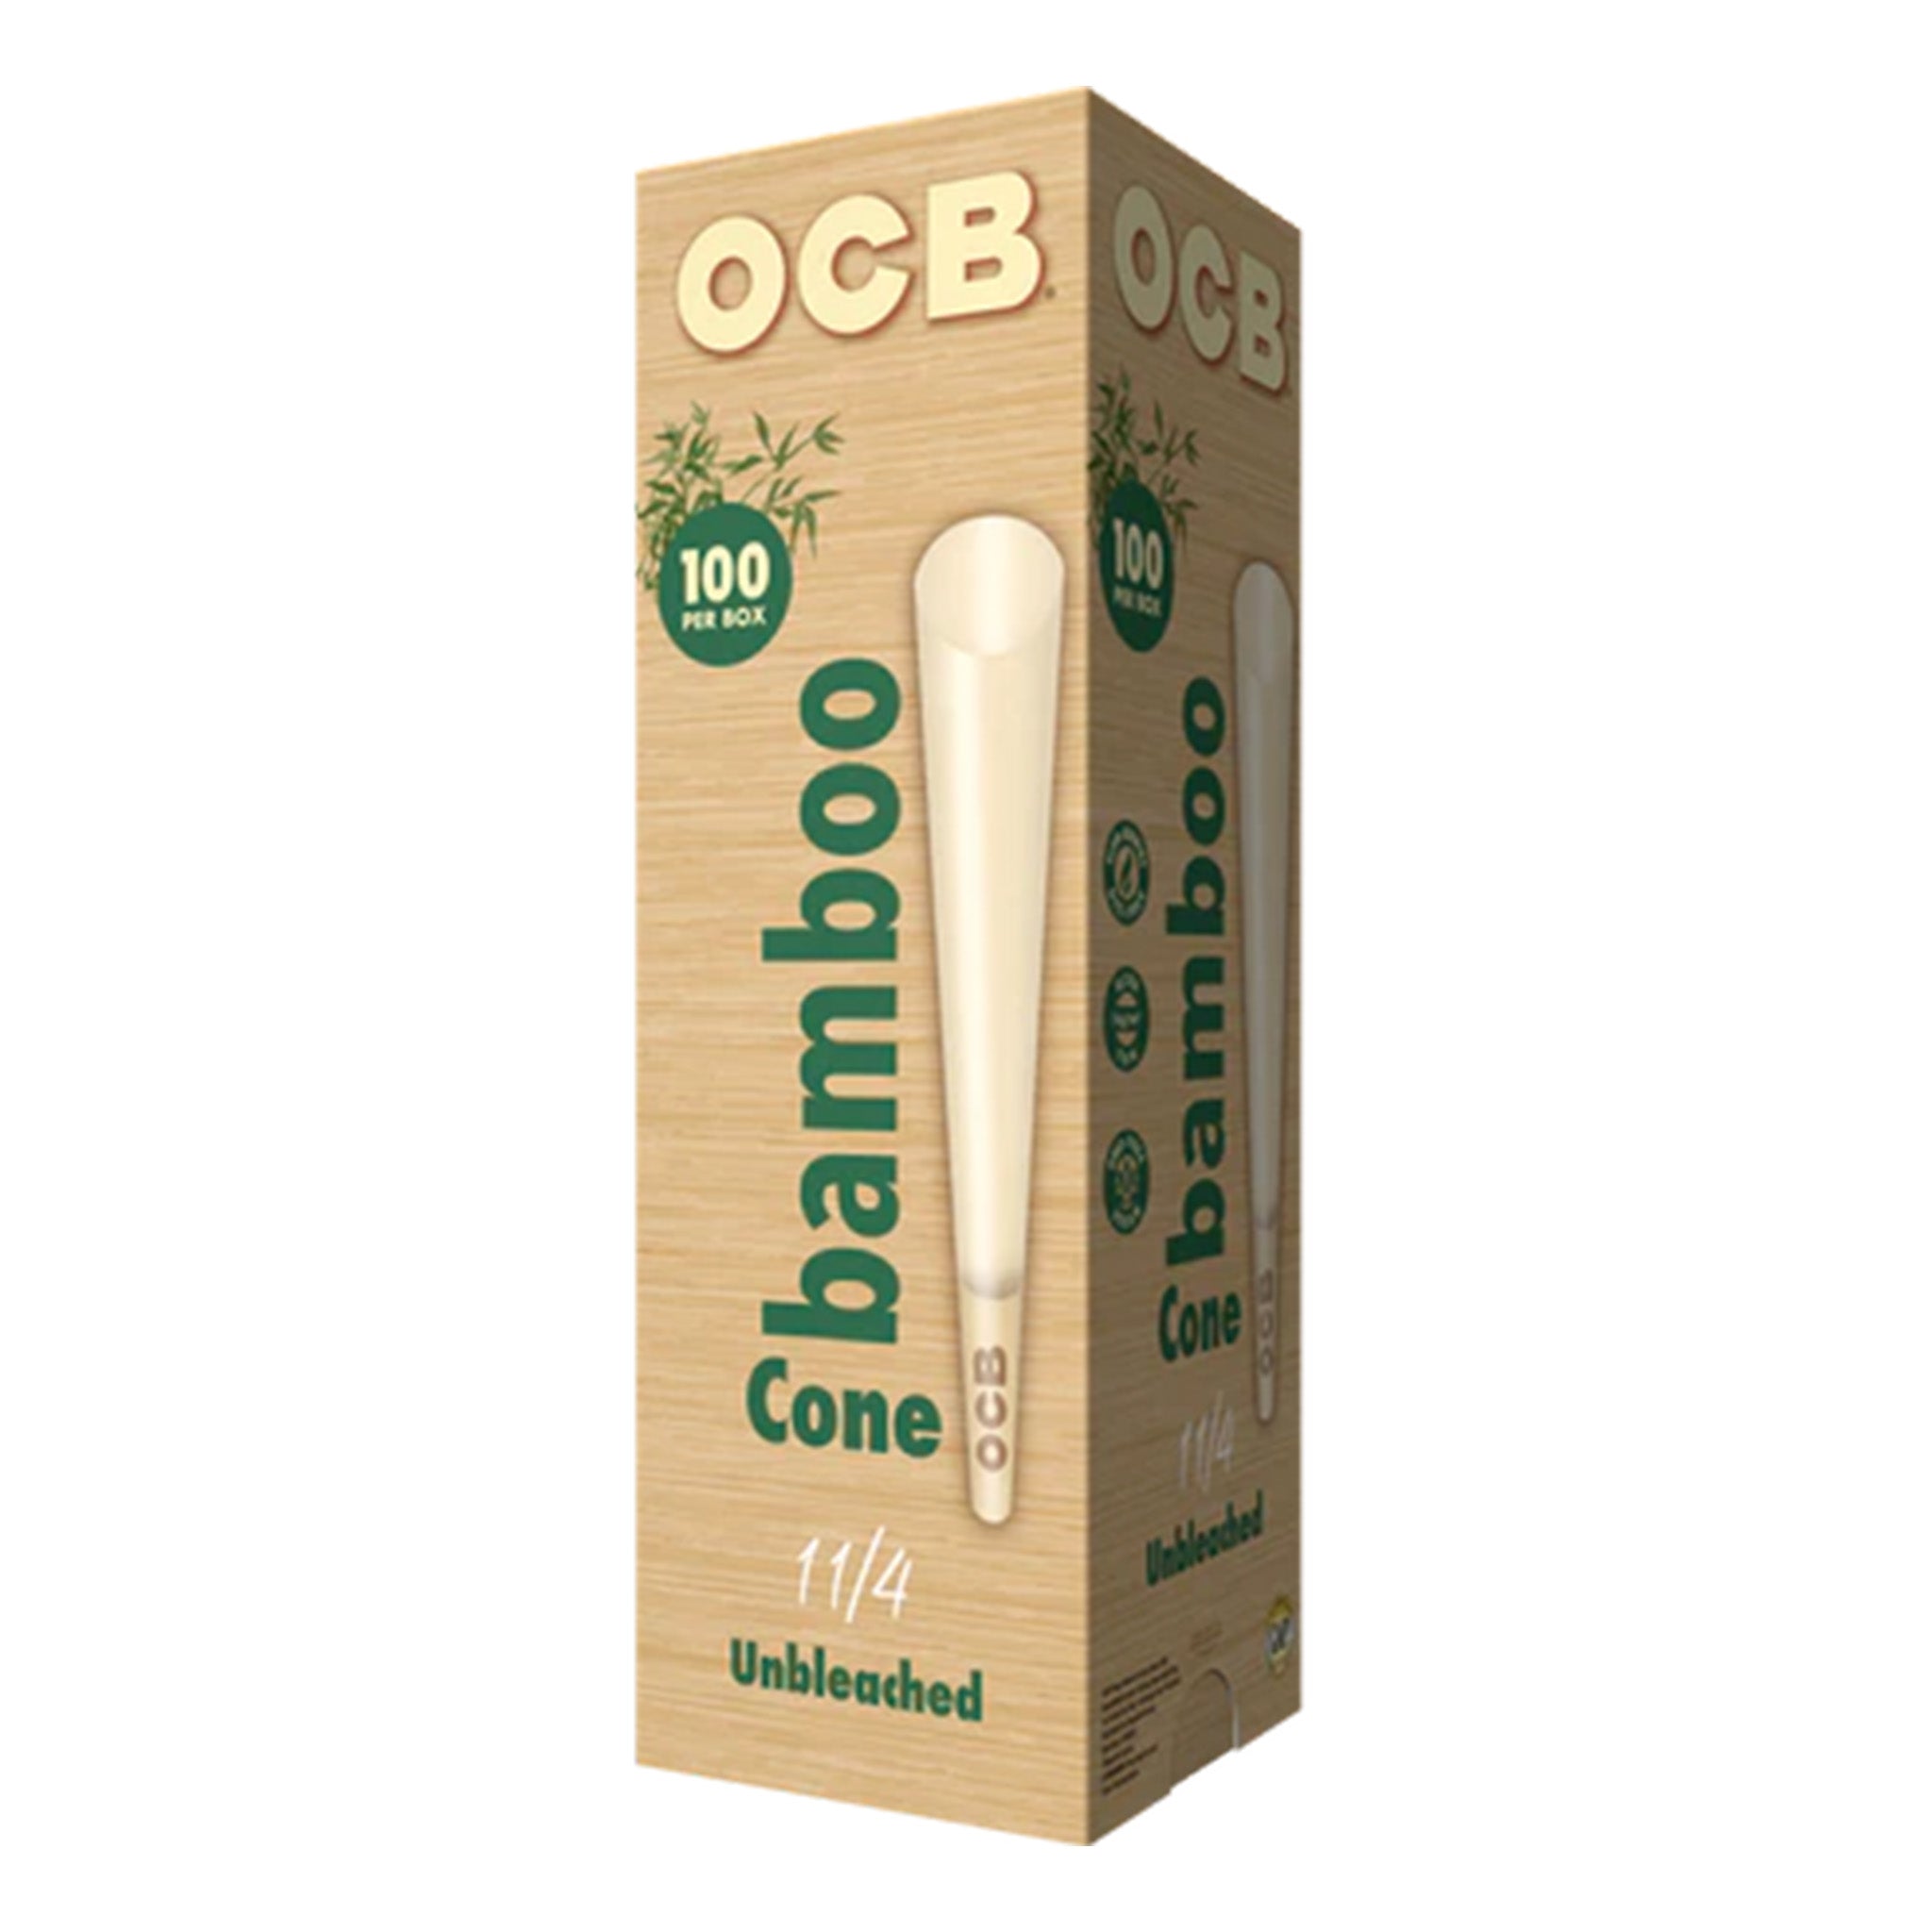 OCB Bamboo 1 1/4 Cones Large Box Cone OCB 100 